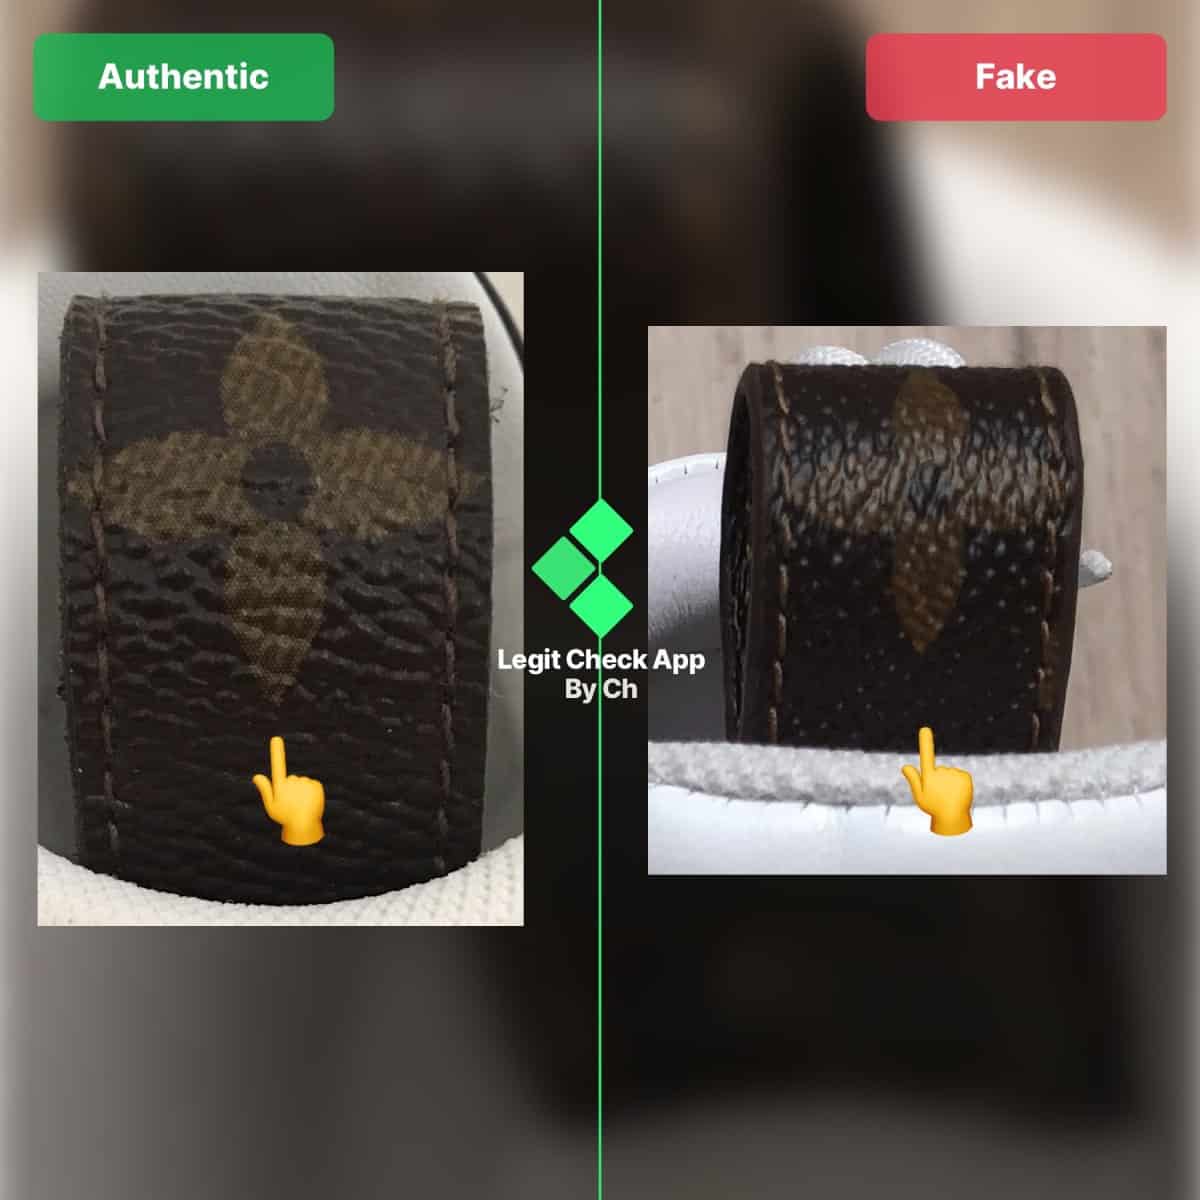 Louis Vuitton Archlight fake vs real